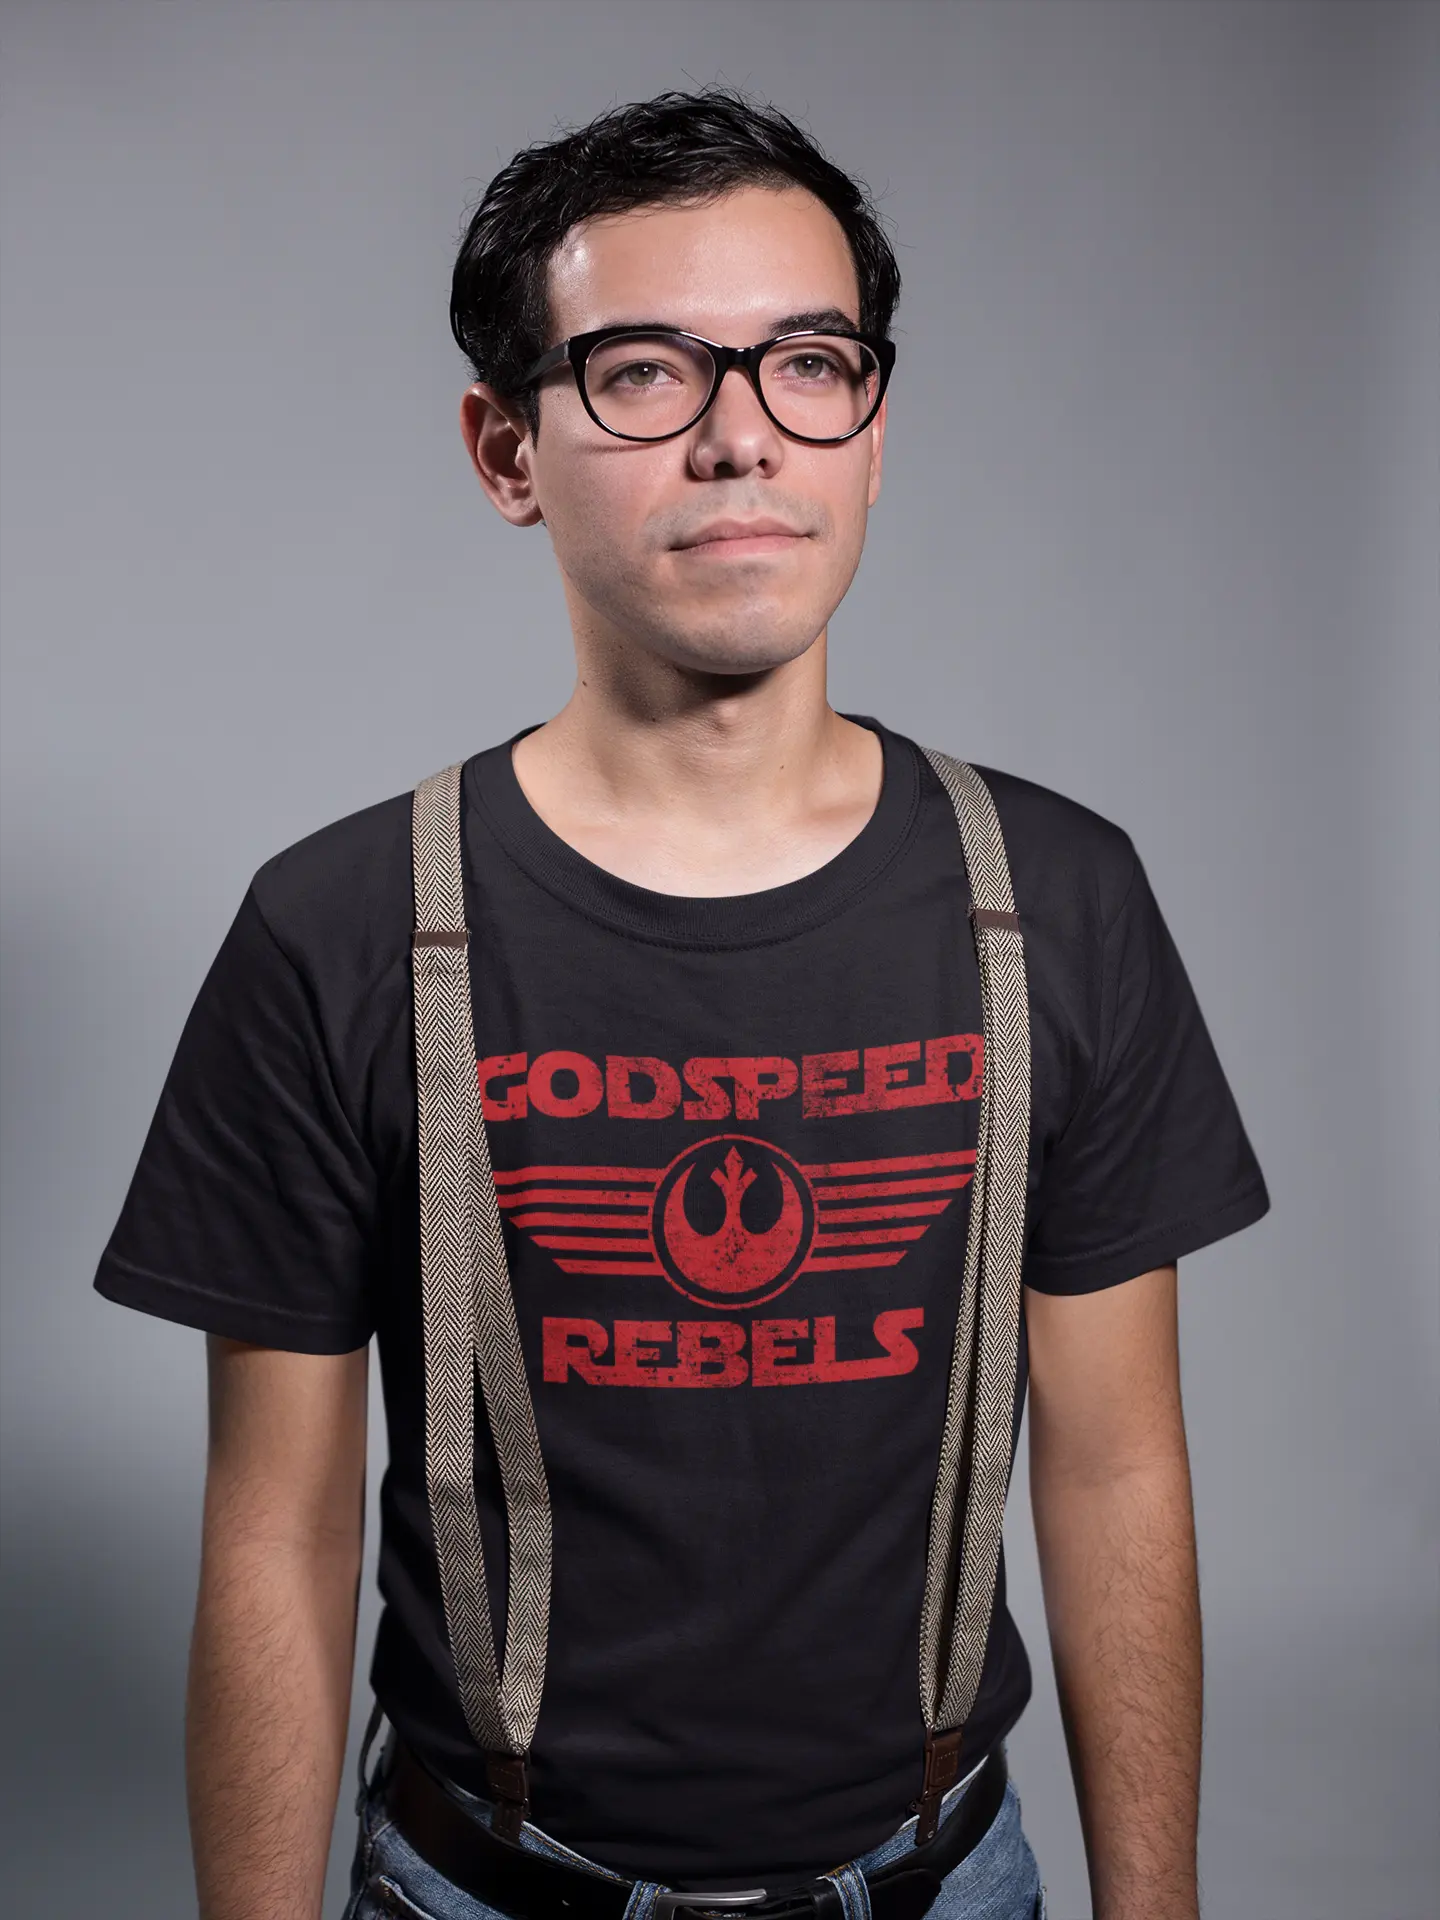 Godspeed Rebels Tshirt - Donkey Tees